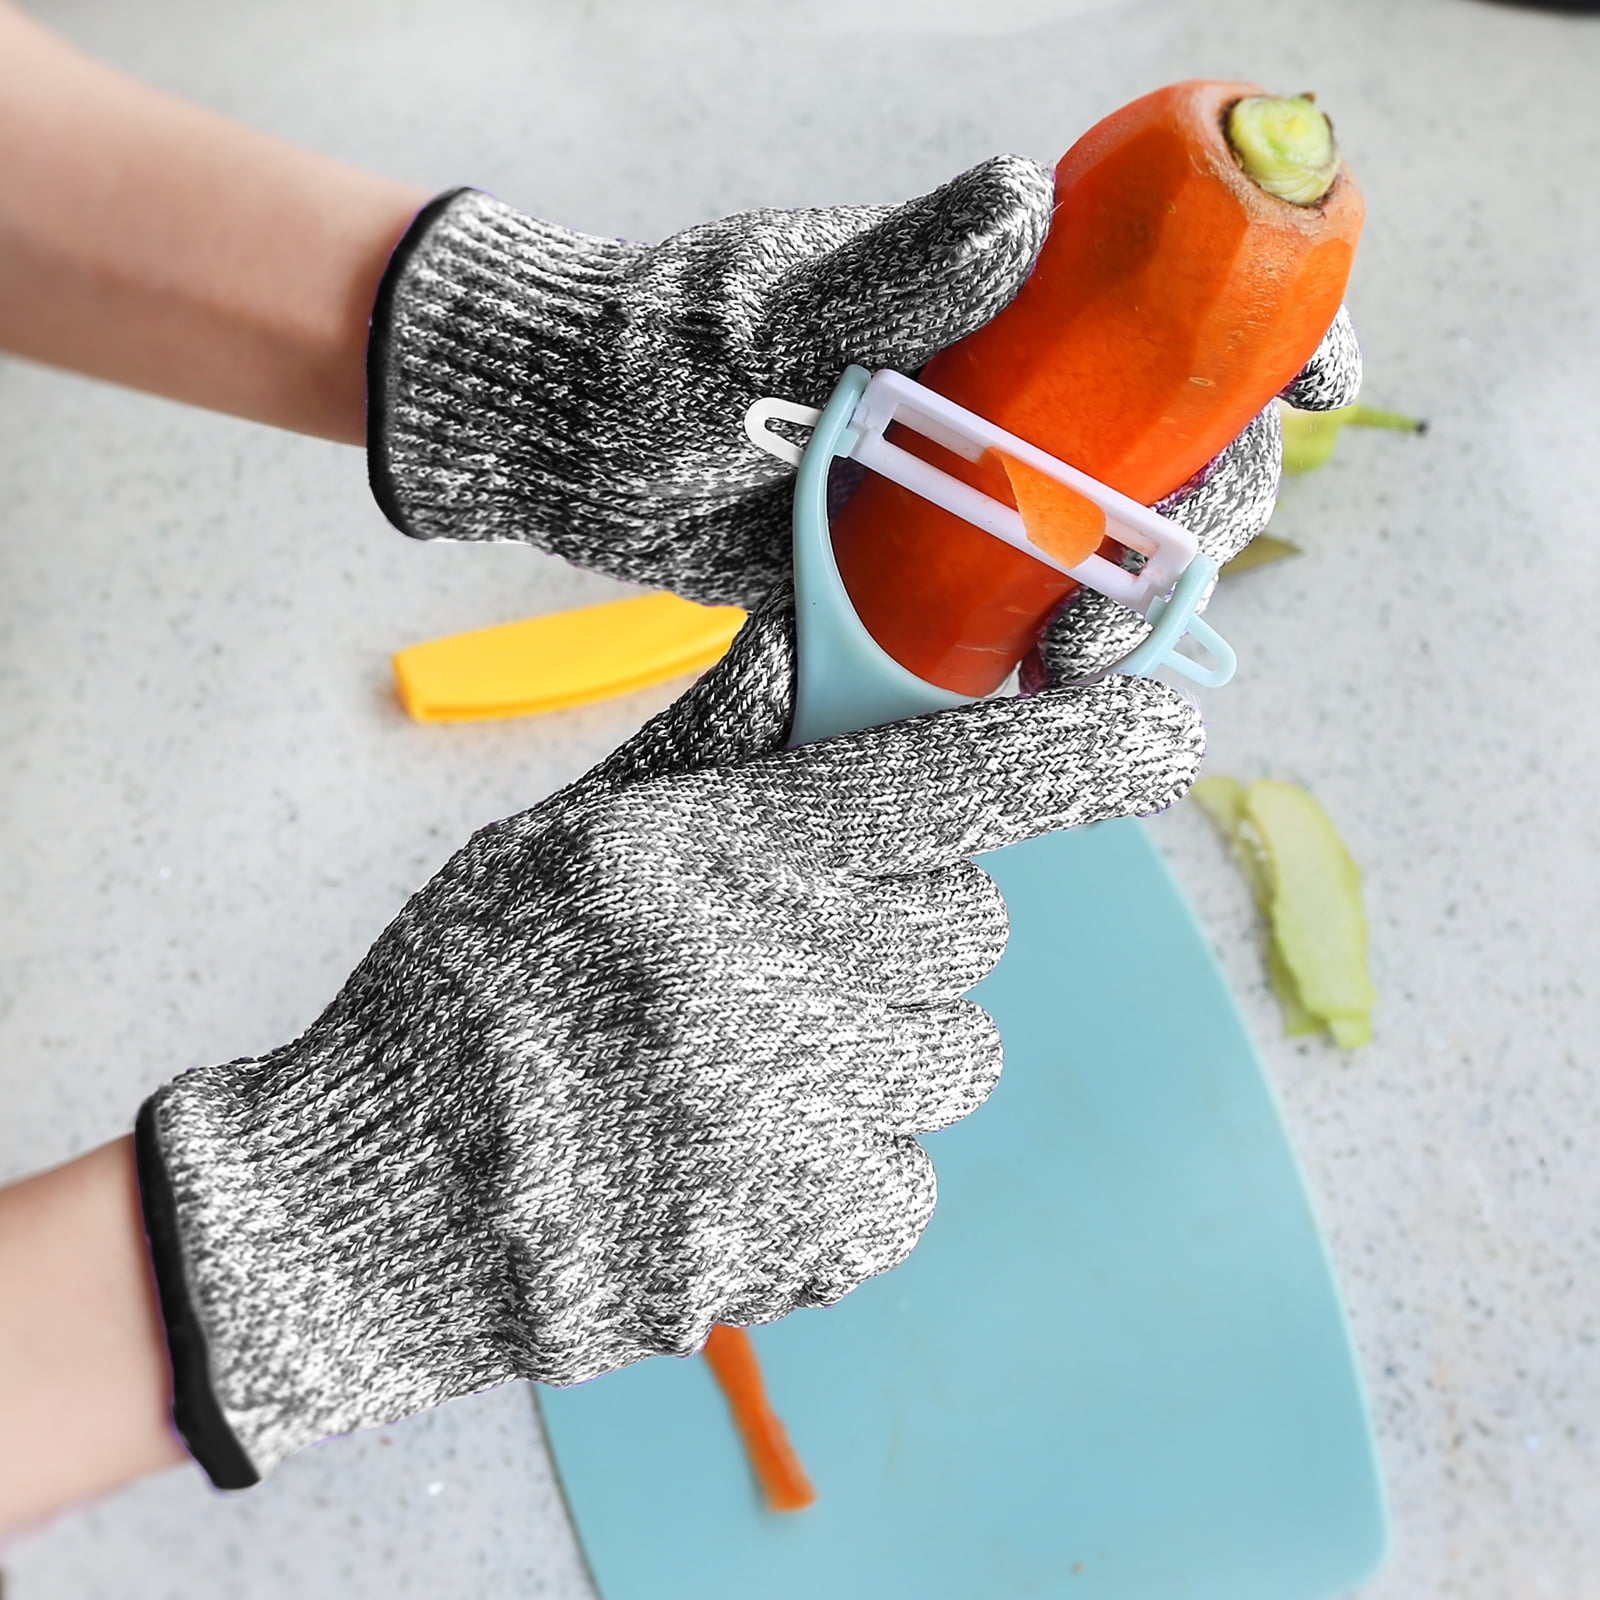 Microplane Cut Resistant Kids Glove